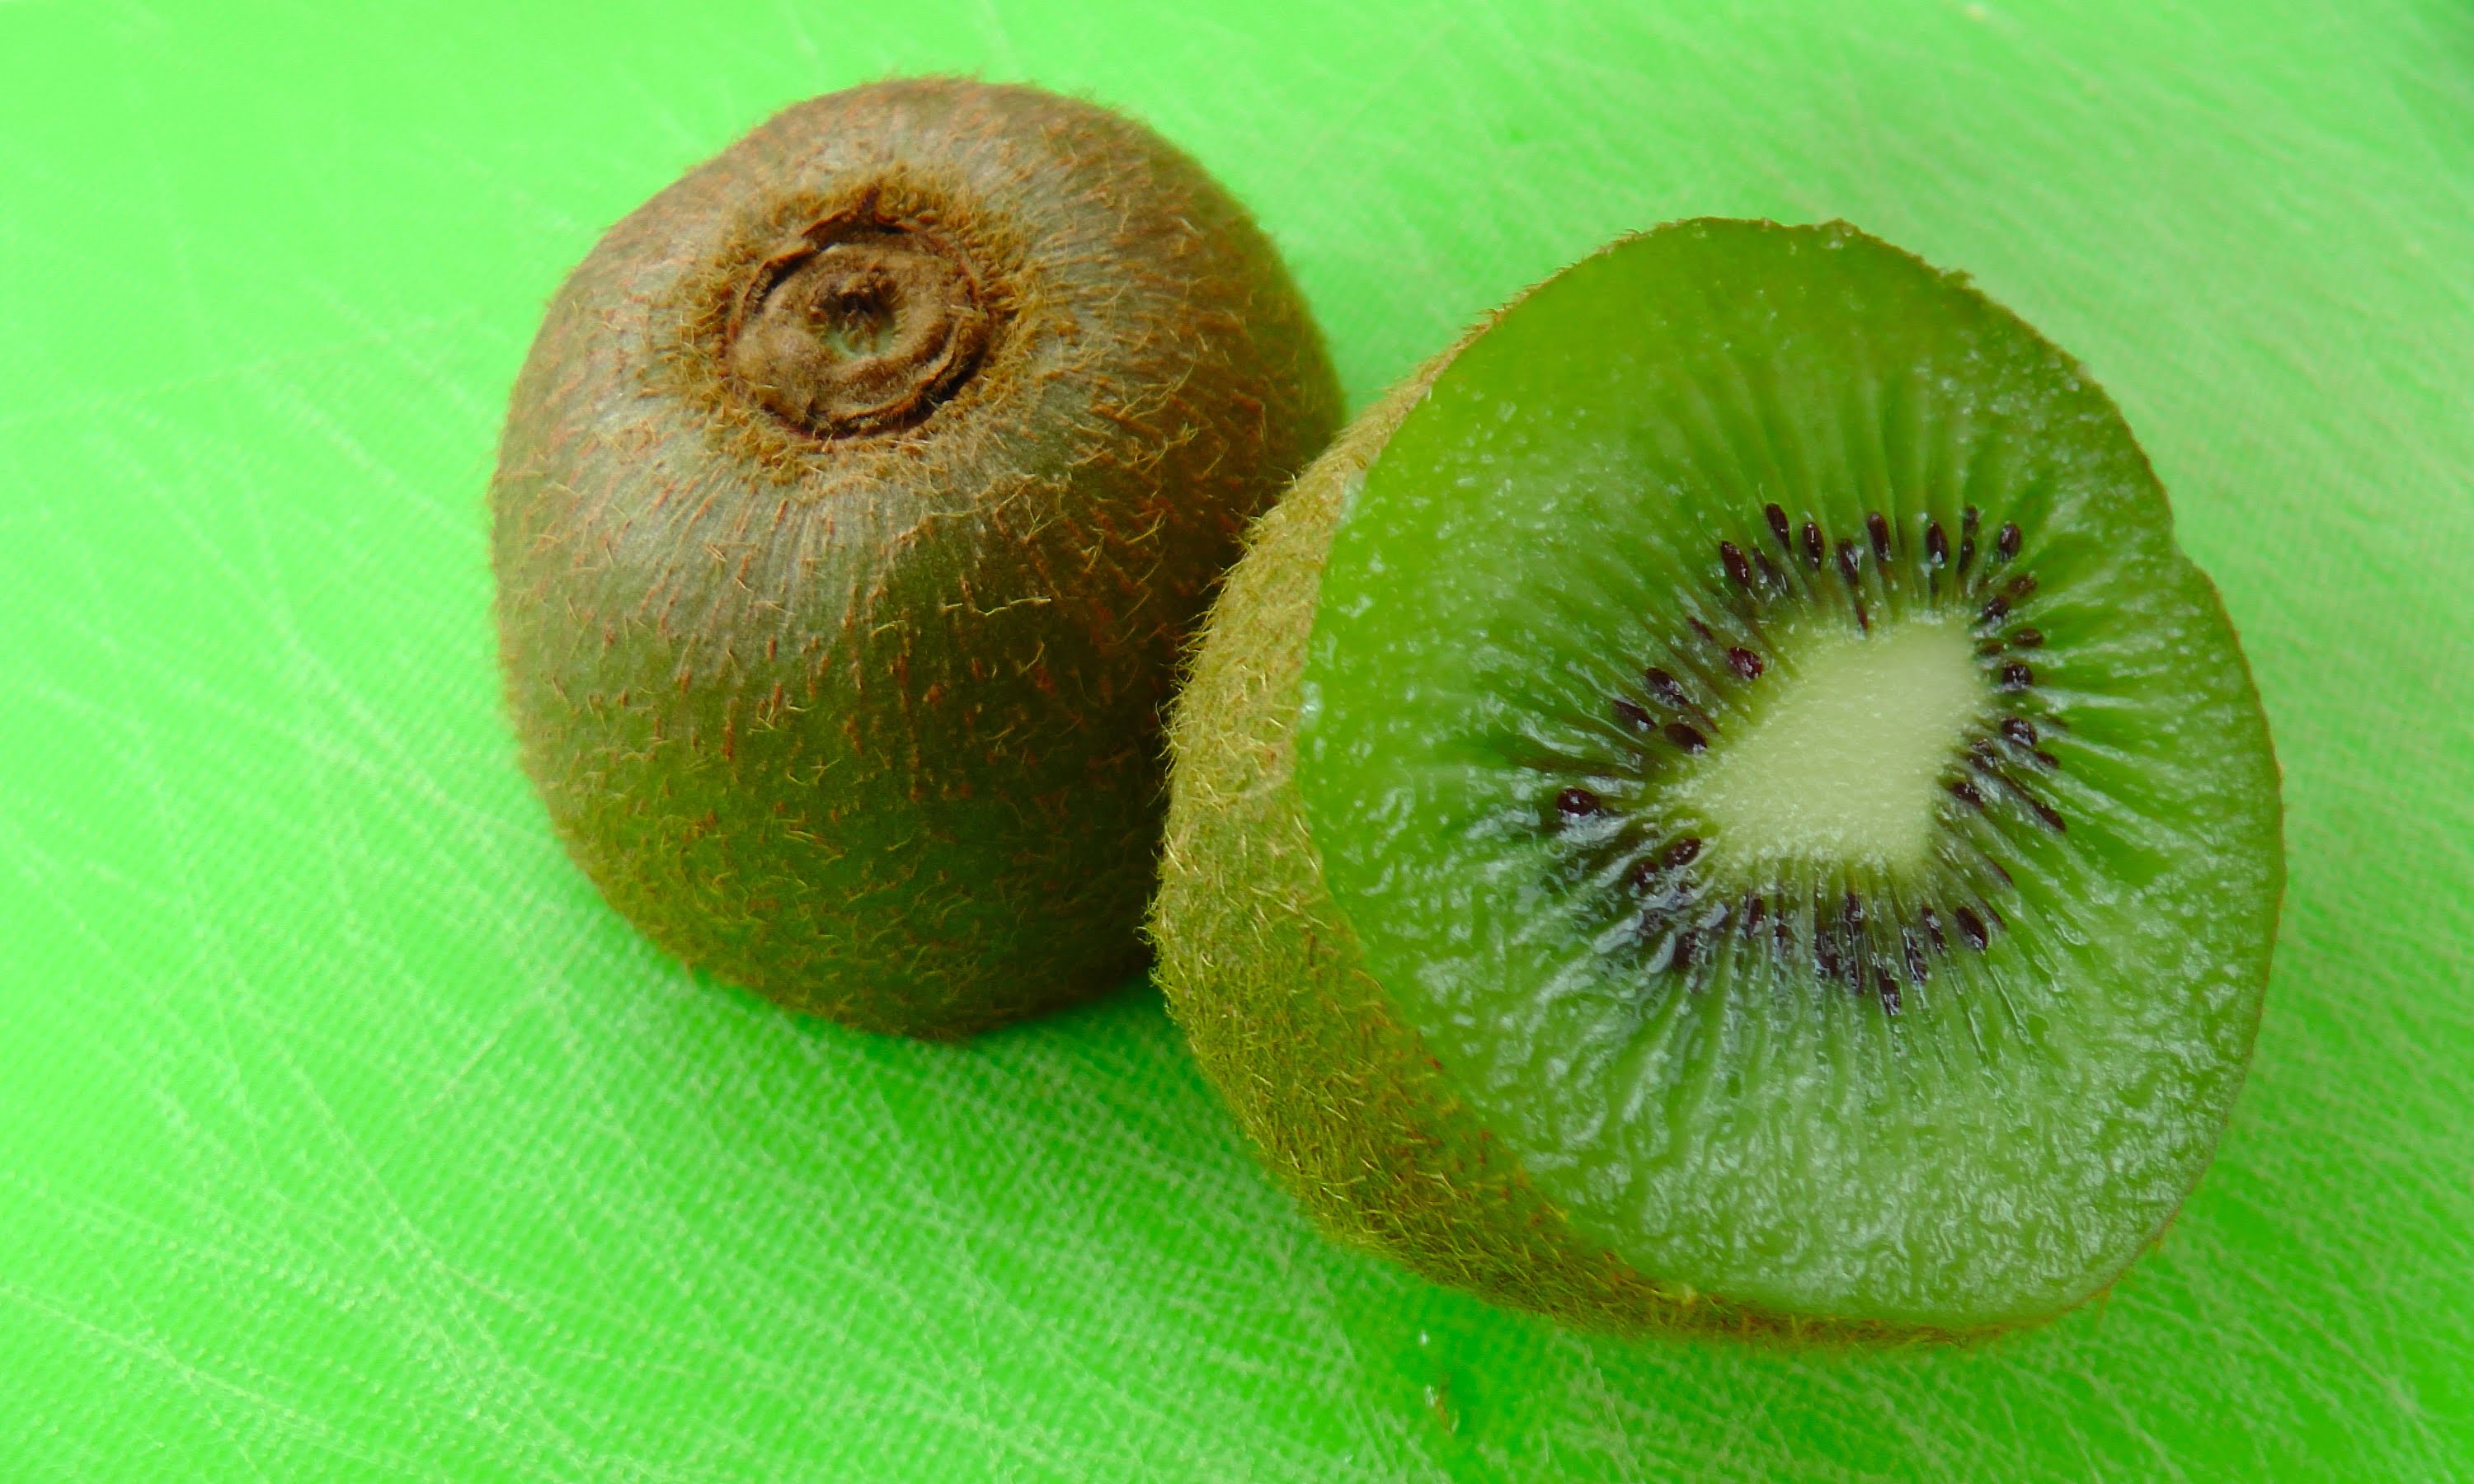 How to eat a Kiwi Fruit - YouTube